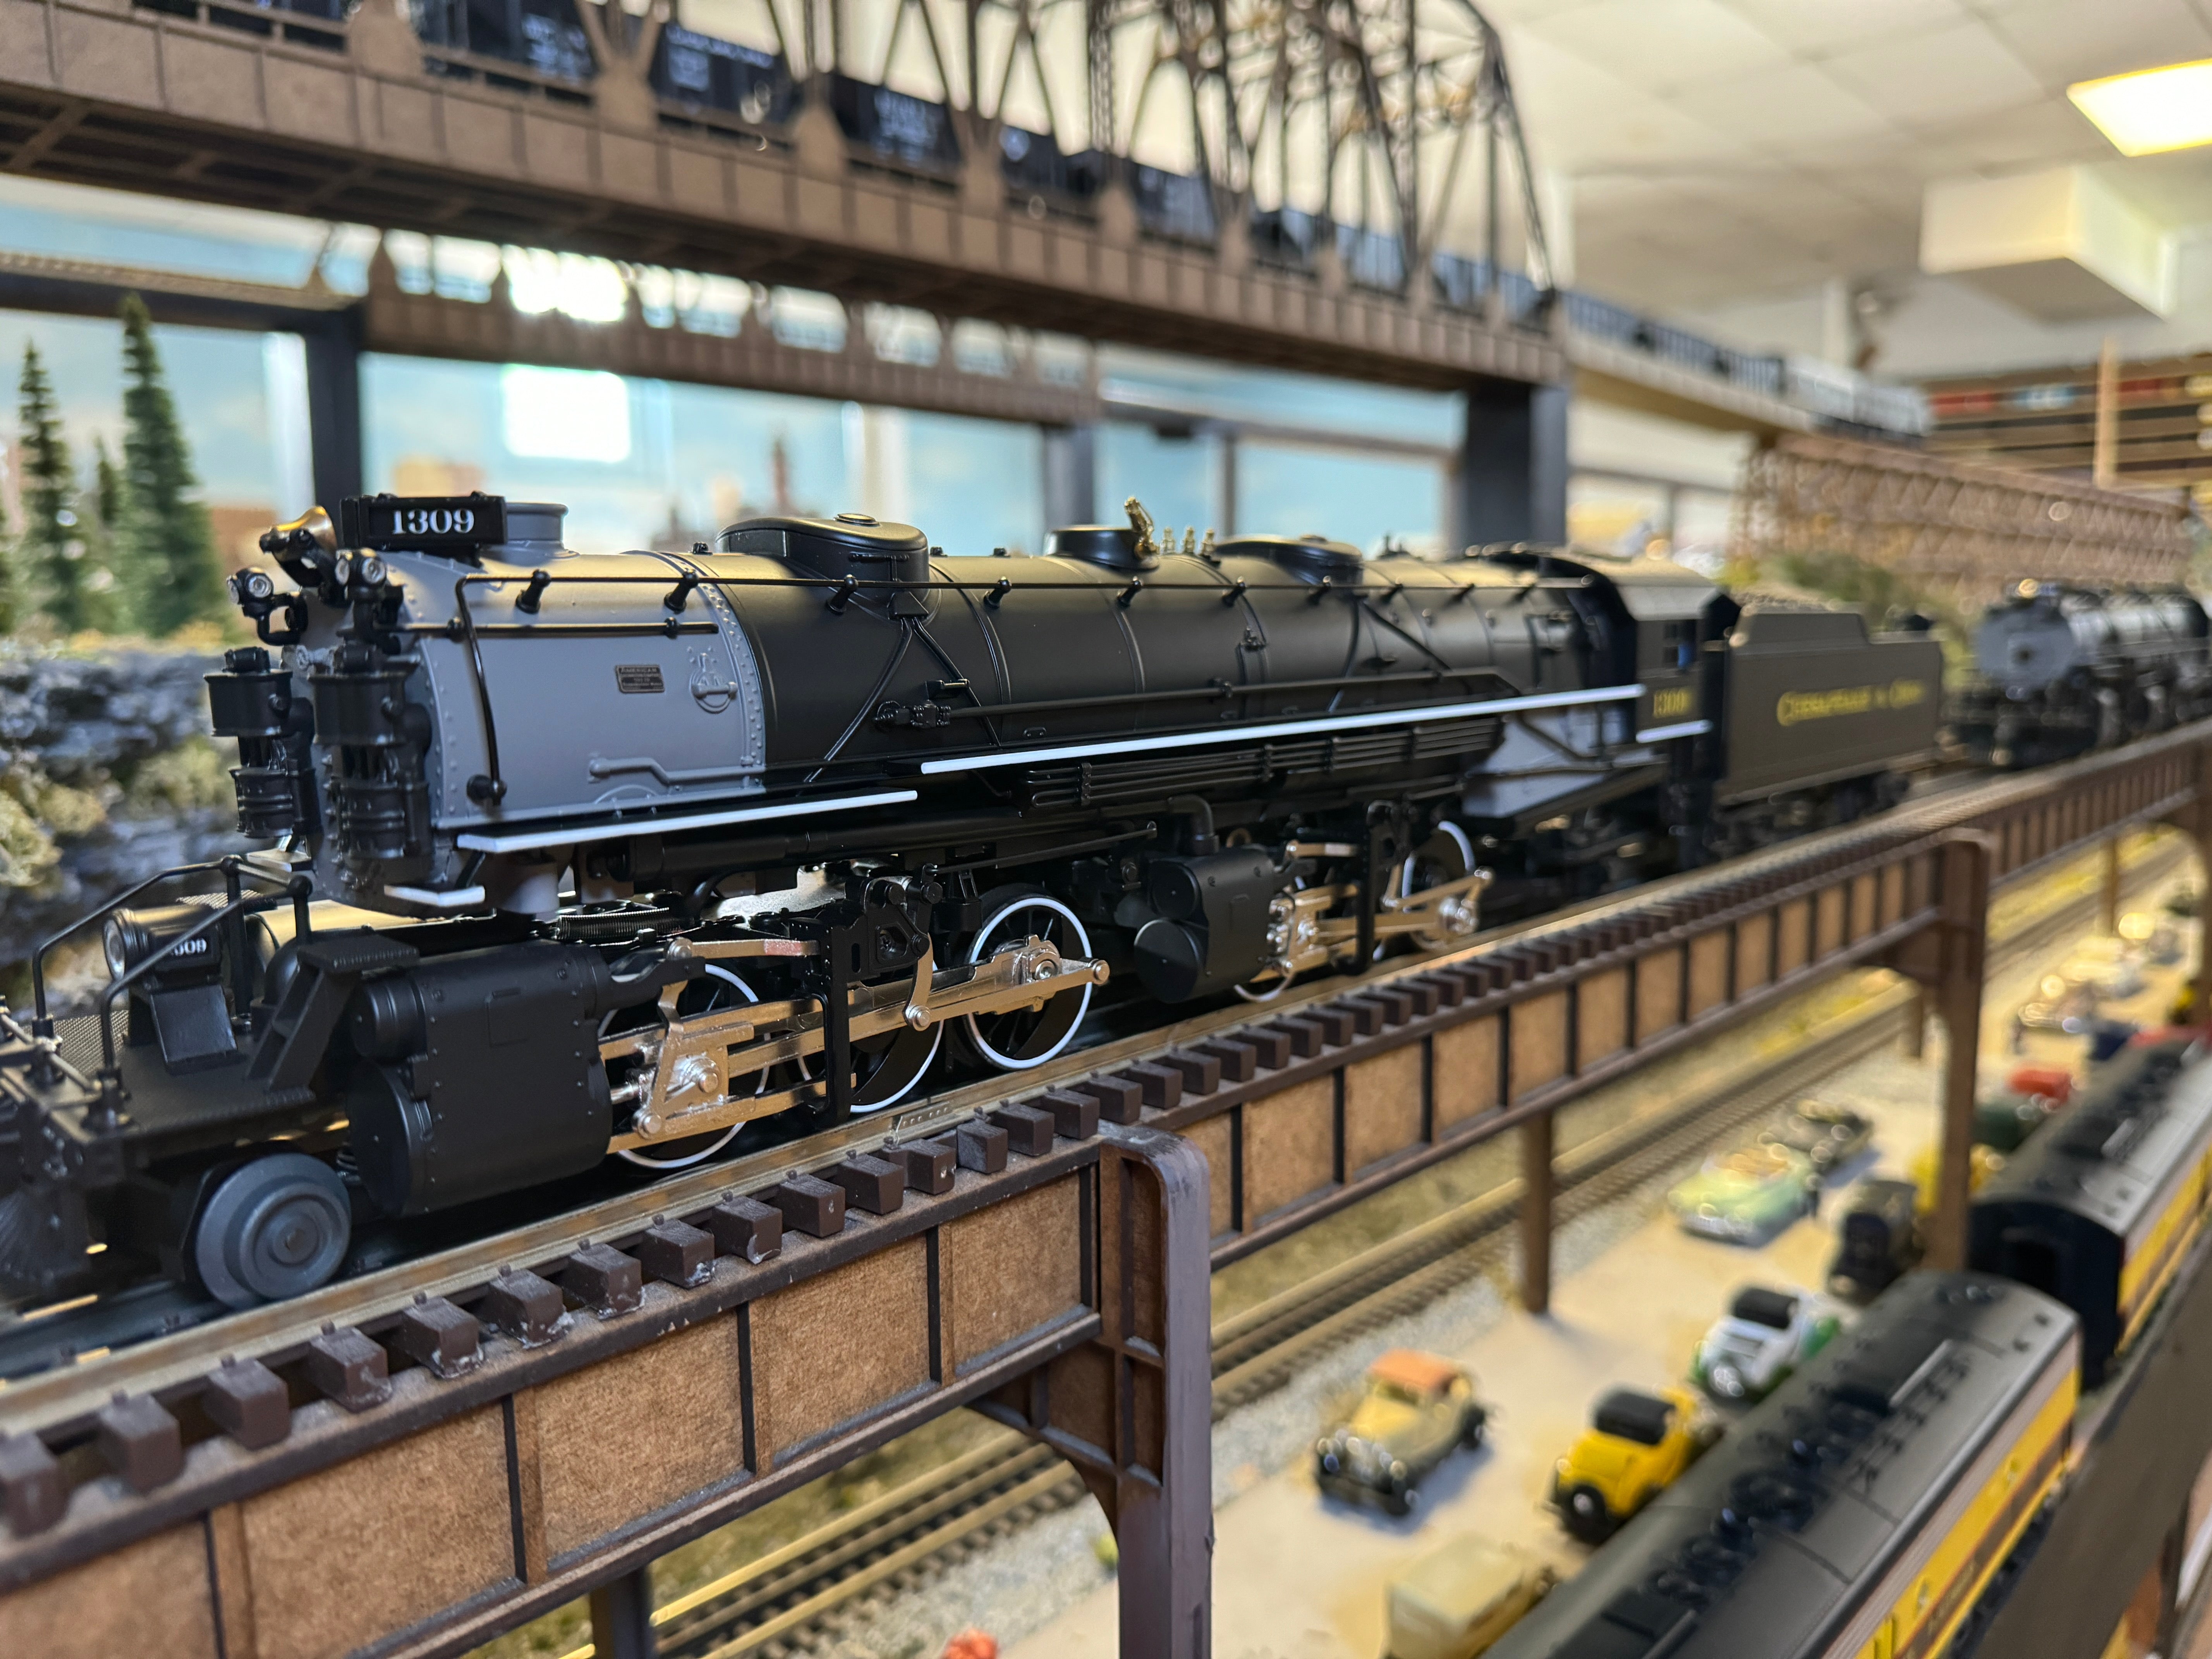 Lionel 2431810 - Legacy 2-6-6-2 Steam Engine "Chesapeake & Ohio" #1309 - Custom Run for MrMuffin'sTrains